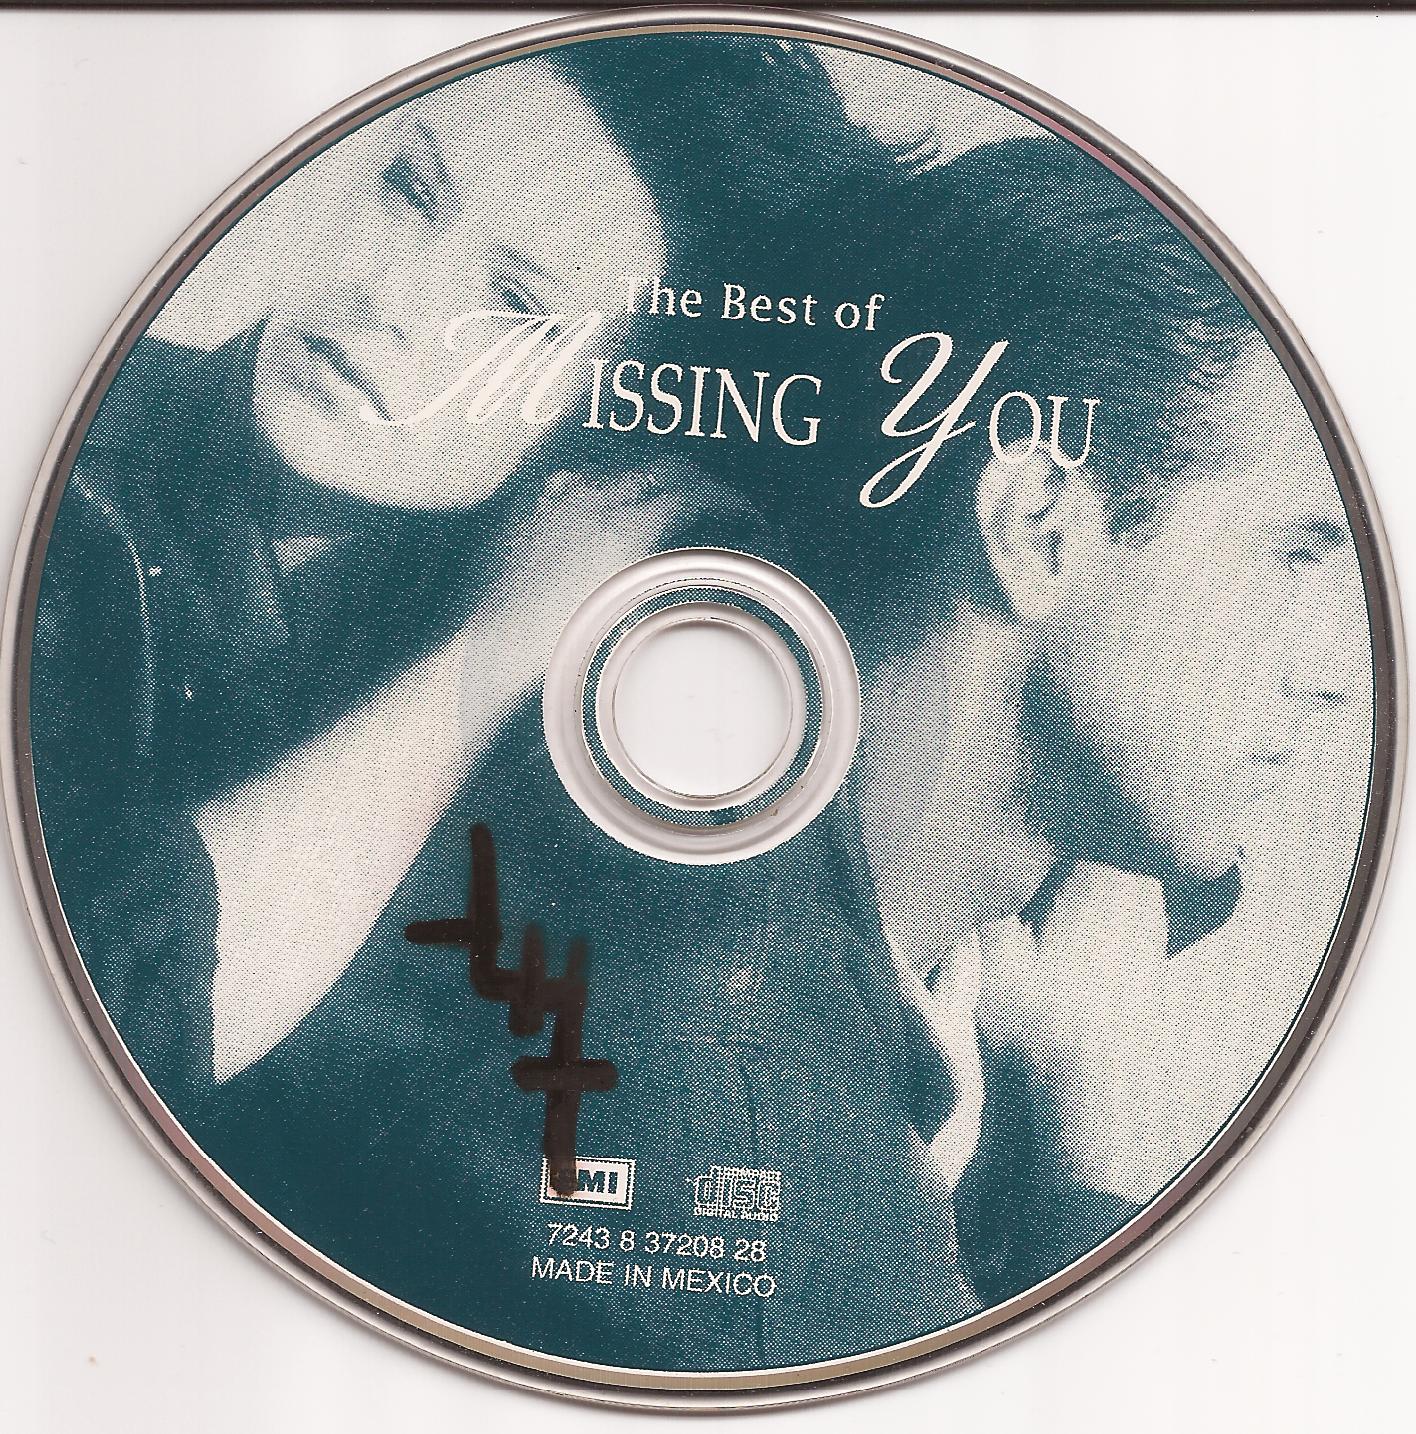 http://3.bp.blogspot.com/-yQLT5tEYO3Q/T3kMeaQ4W8I/AAAAAAAACQo/5GfUFJd-Wm0/s1600/Best+Of+Missing+You+cd.jpg